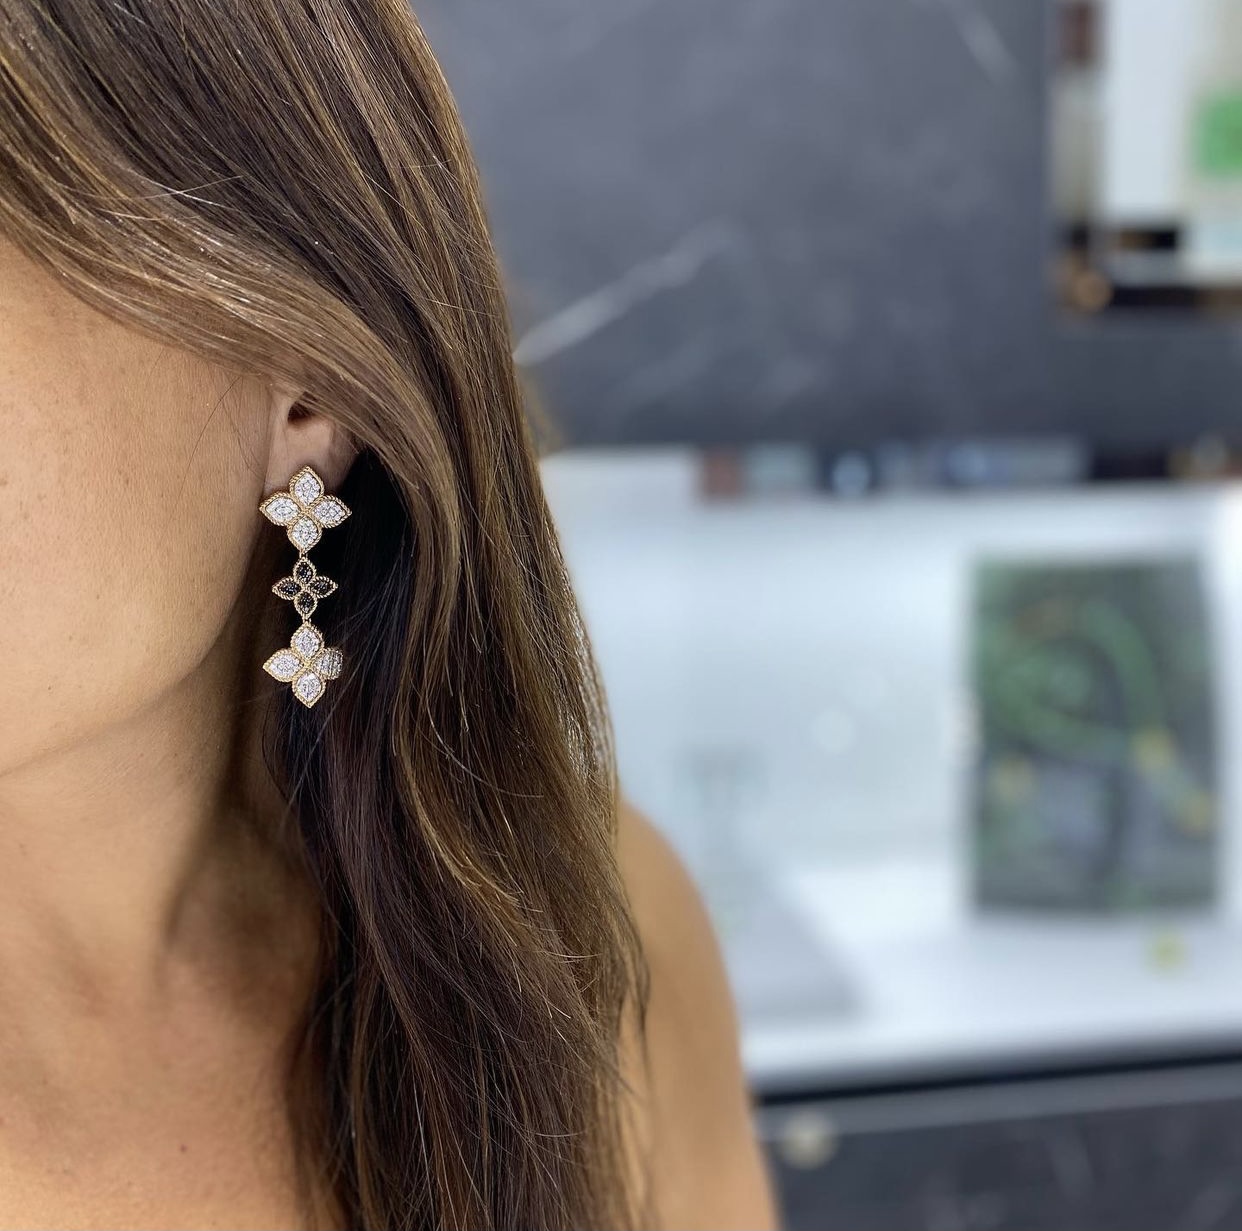 Kenda Kist Jewelry Triple Princess Diamond Drop Earrings at Von Maur